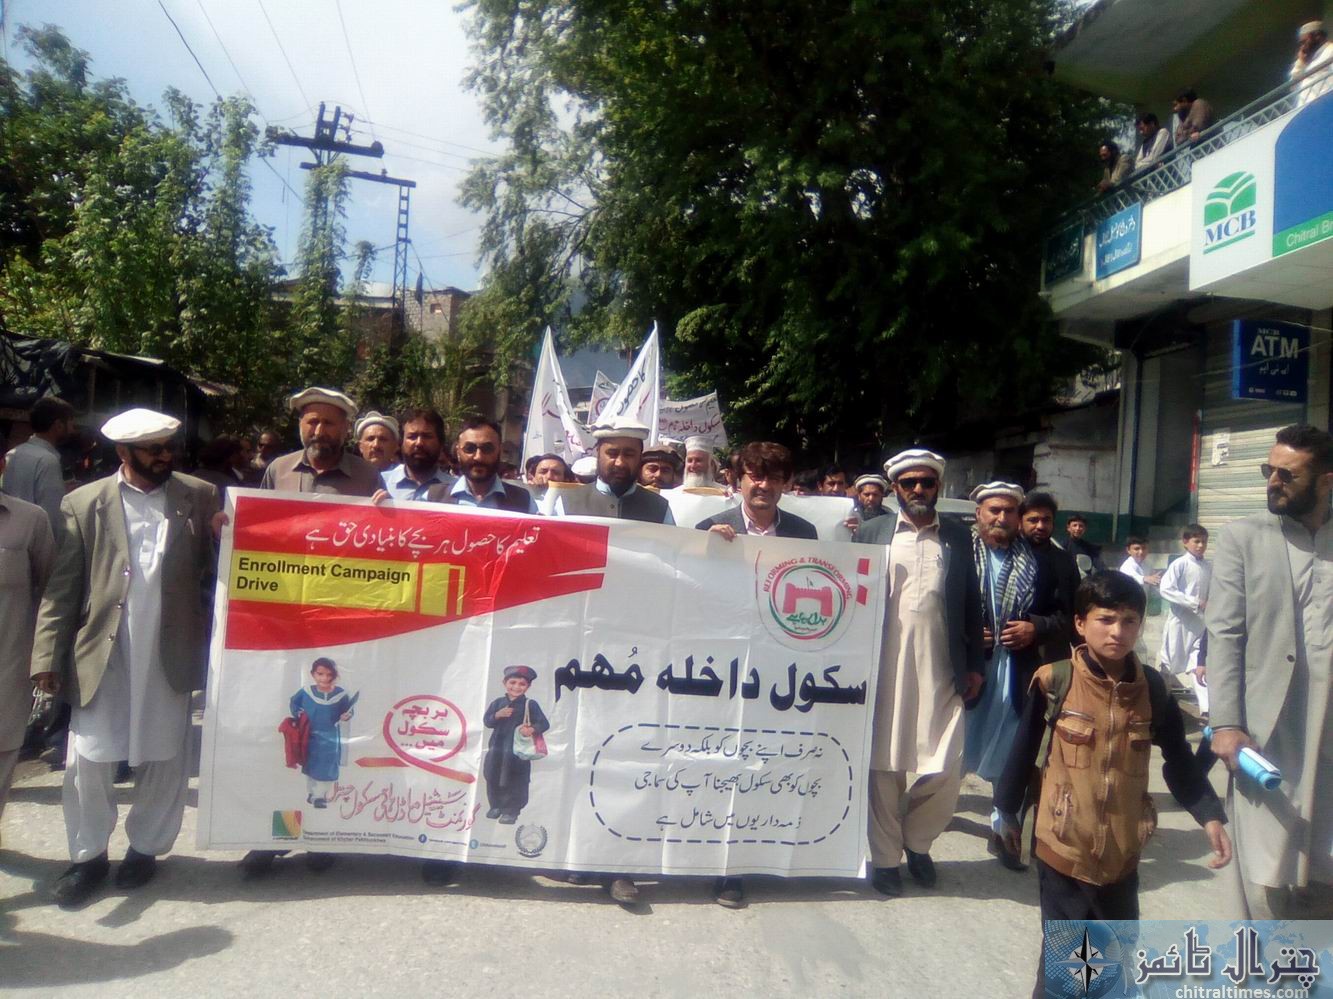 chitral school enrolment campaign awarness walk held in Chiral picSaif ur Rehman Aziz